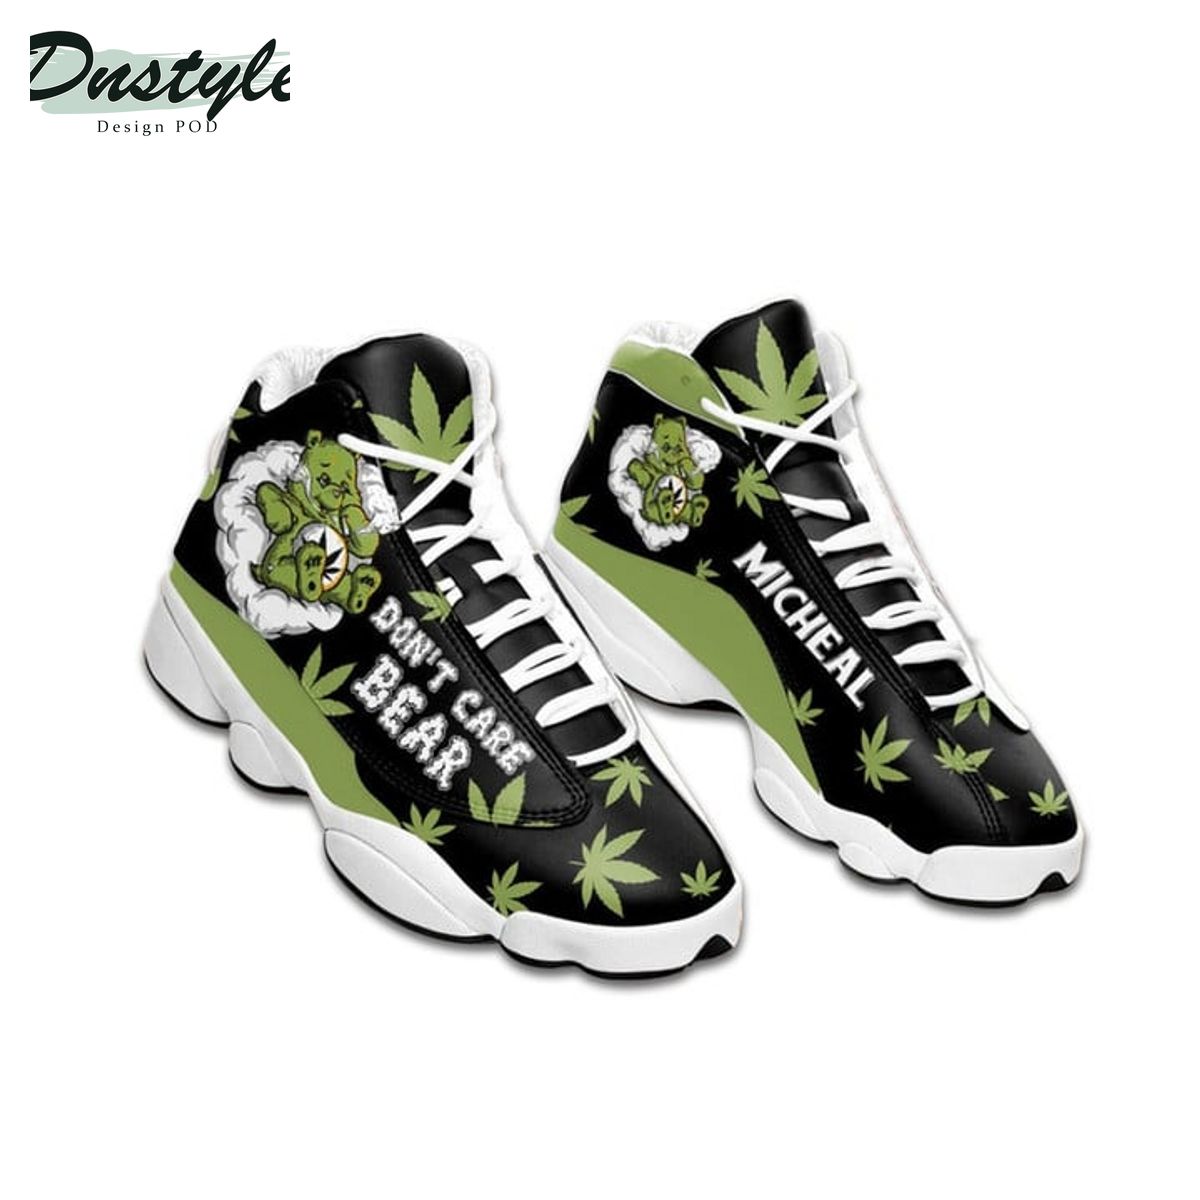 Weed high maintenance black and green custom name air jordan 13 shoes